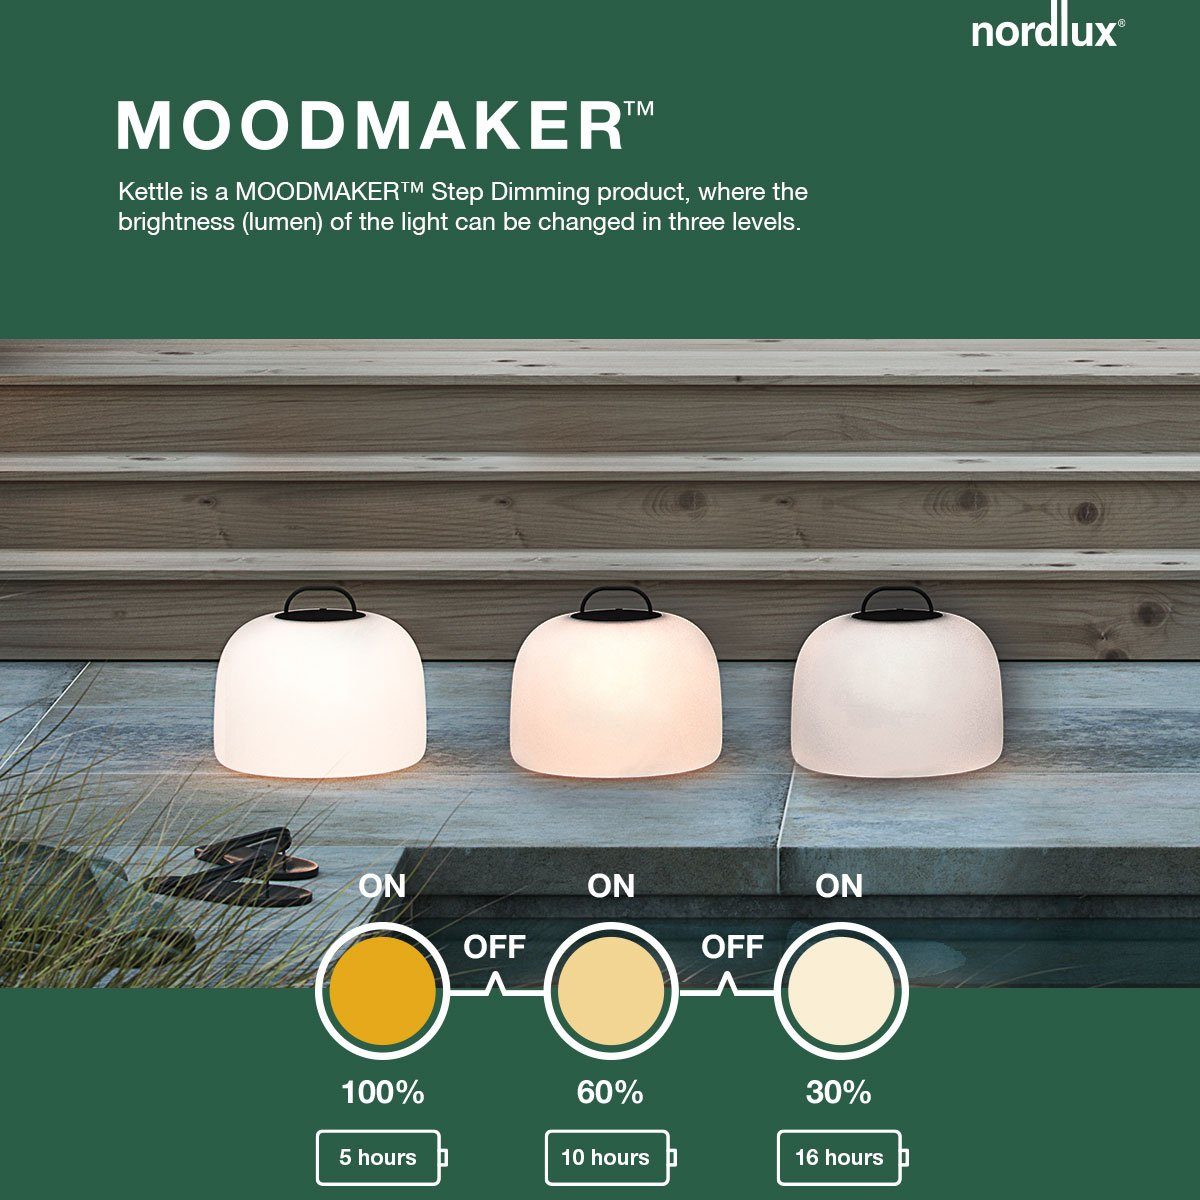 Nordlux LED Stehlampe Kettle, Innen Warmweiß, Ladefunktion, Dimmer, mit fest USB-Anschluss integriert, Dimmfunktion, inkl. integrierter Außen LED, und LED Dimmer, Batterie